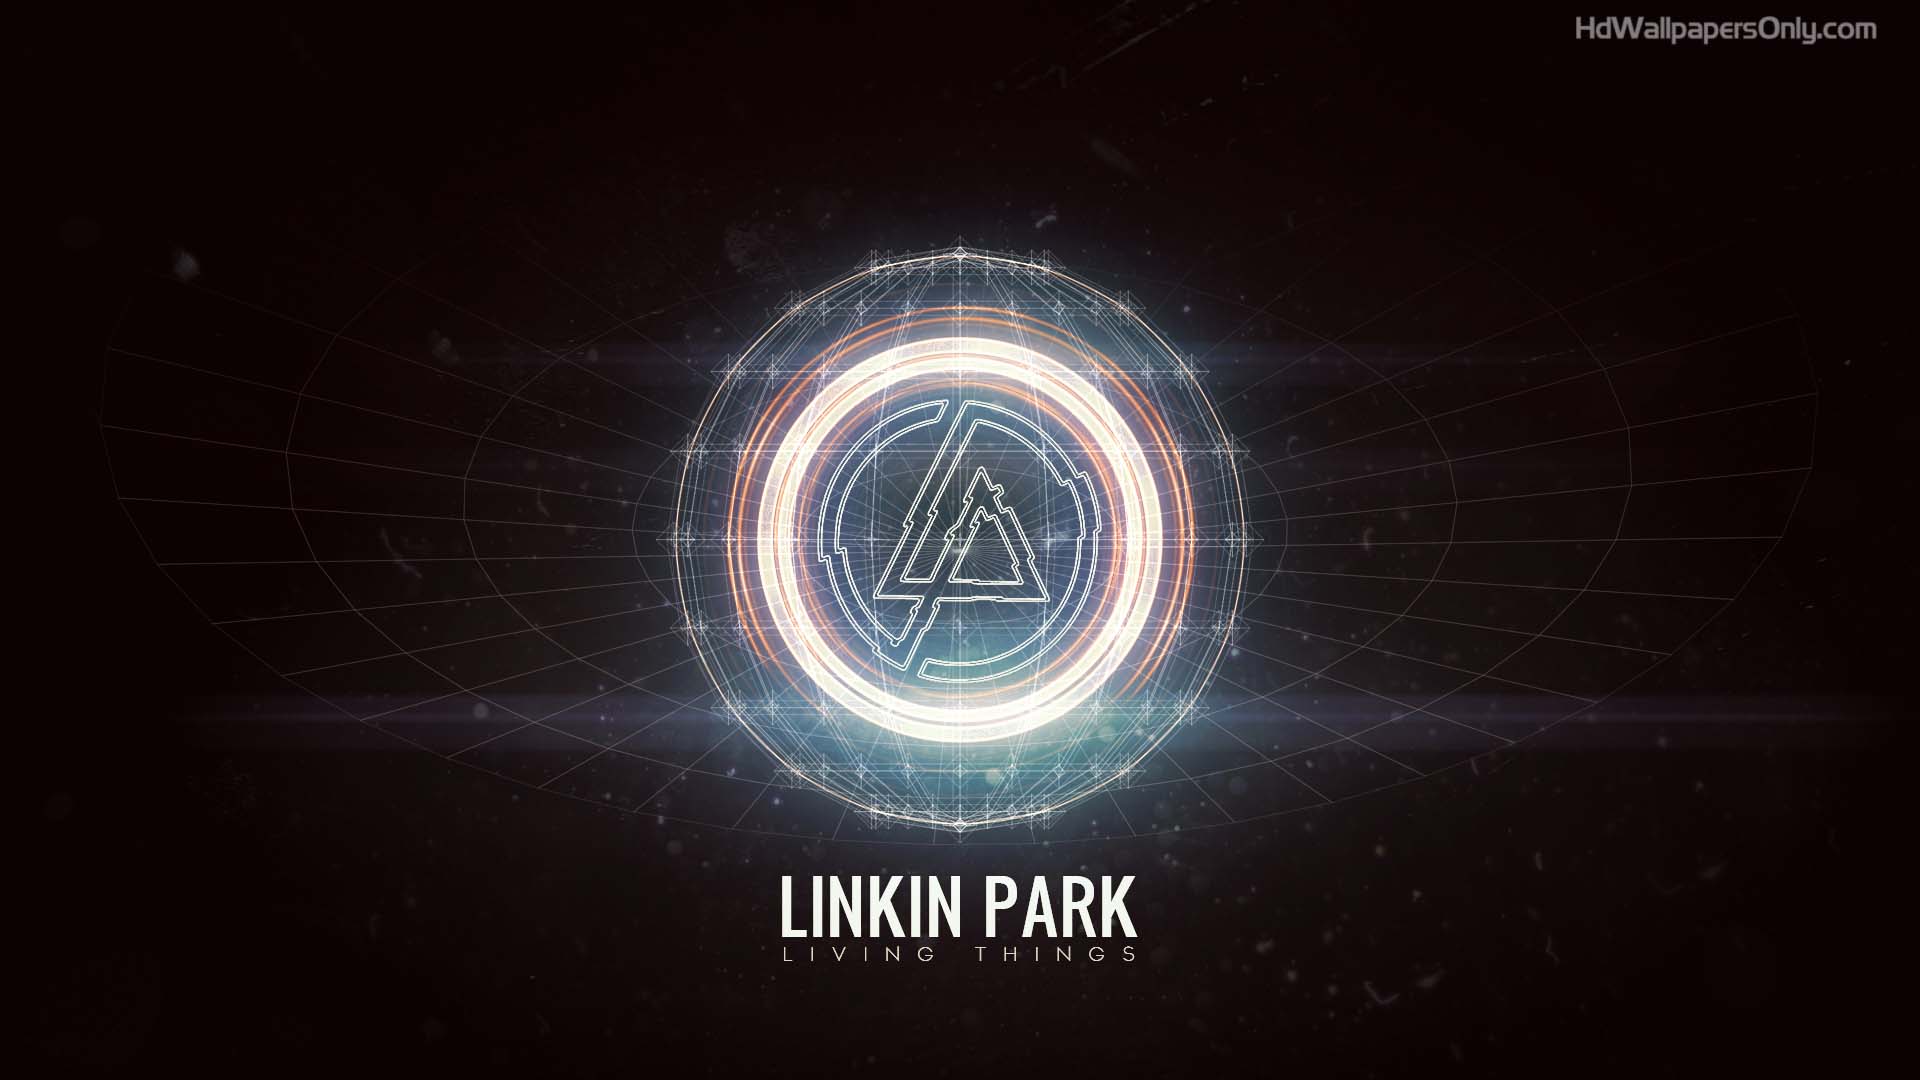 Linkin Park HD Wallpaper 1080p OnlyHD Only